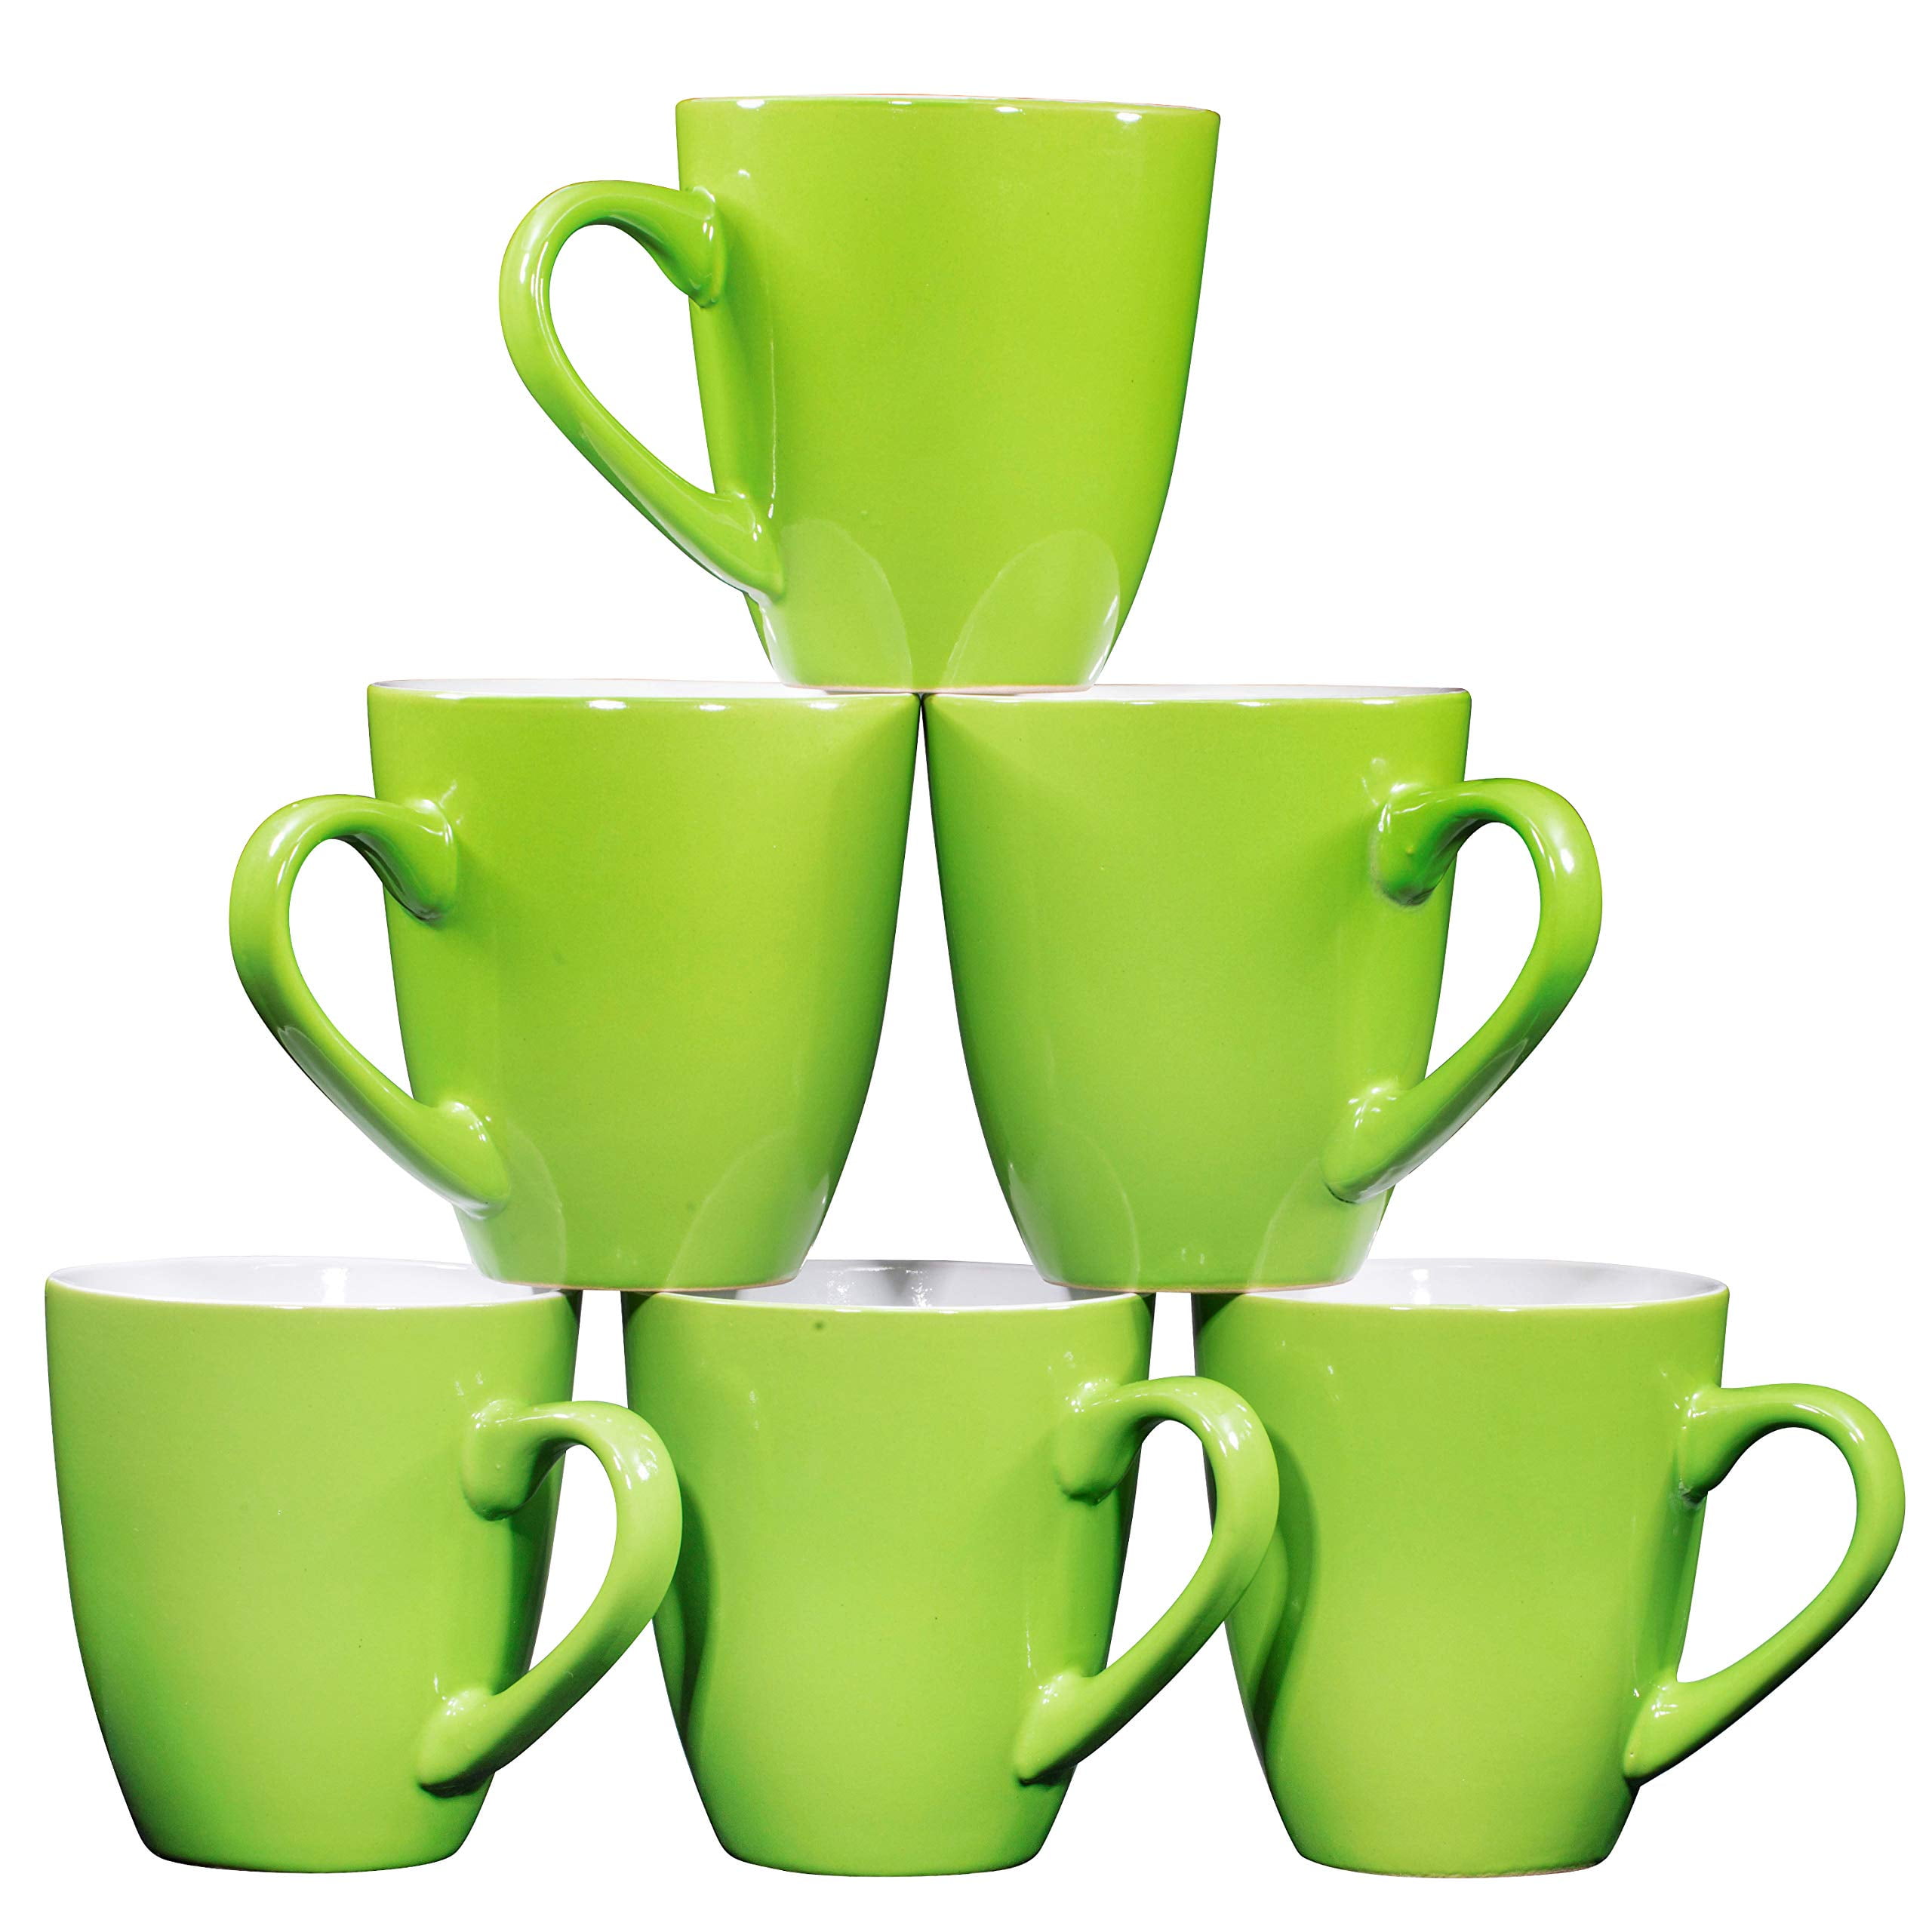 Buy Inox Cap 340ml (Set of 1) Ceramic Coffee Mug at 71% OFF by The Earth  Store